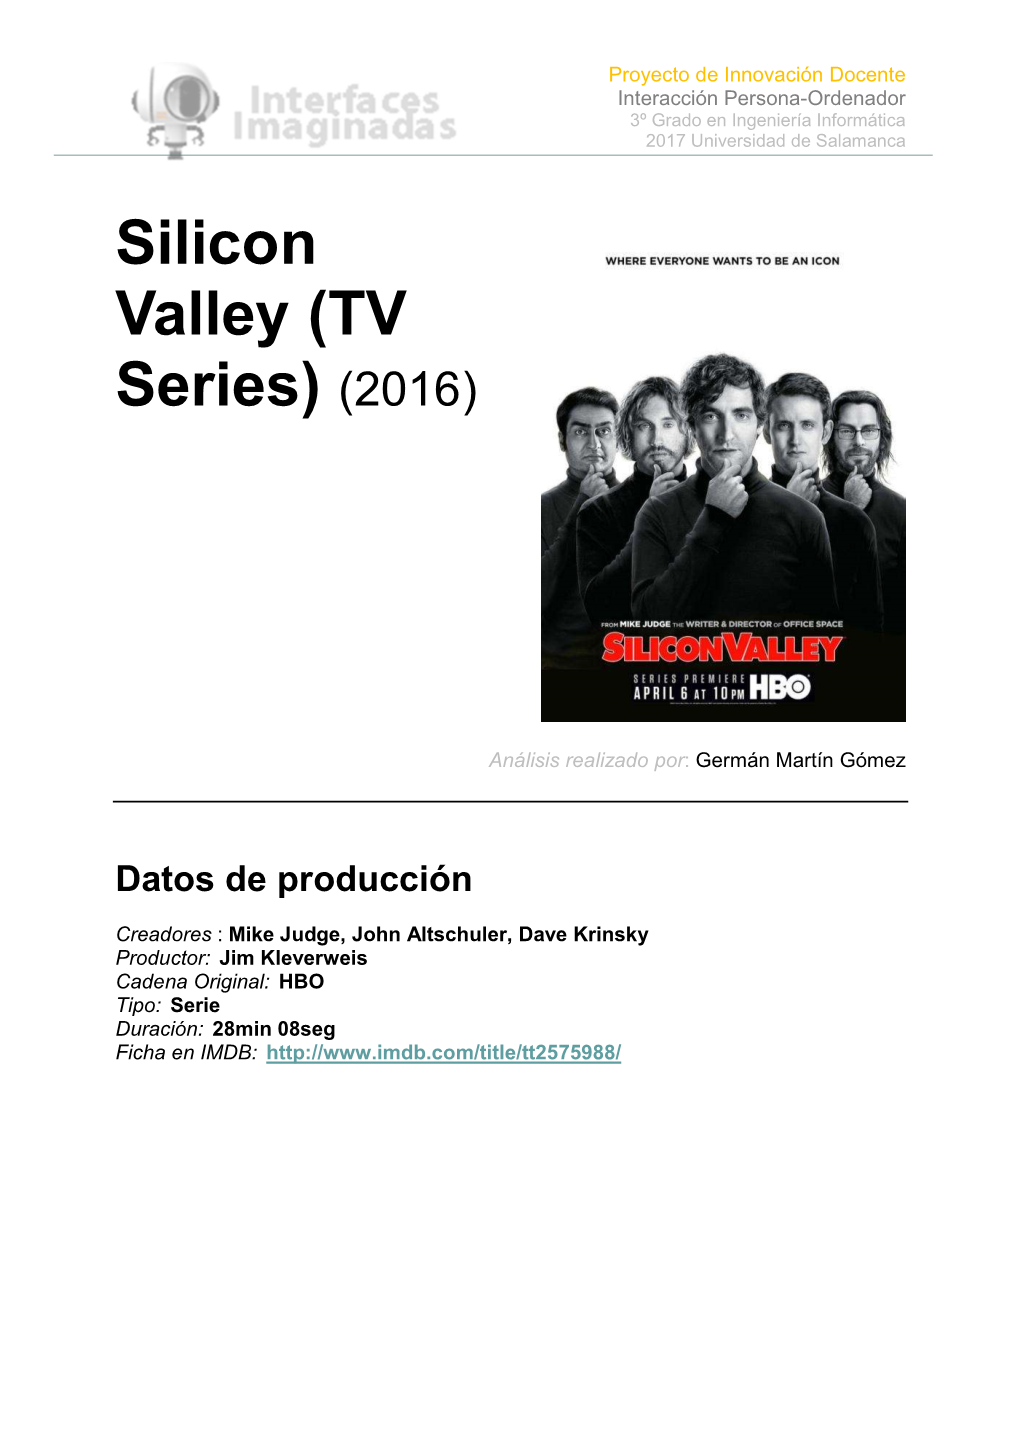 Silicon Valley (TV Series) (2016)